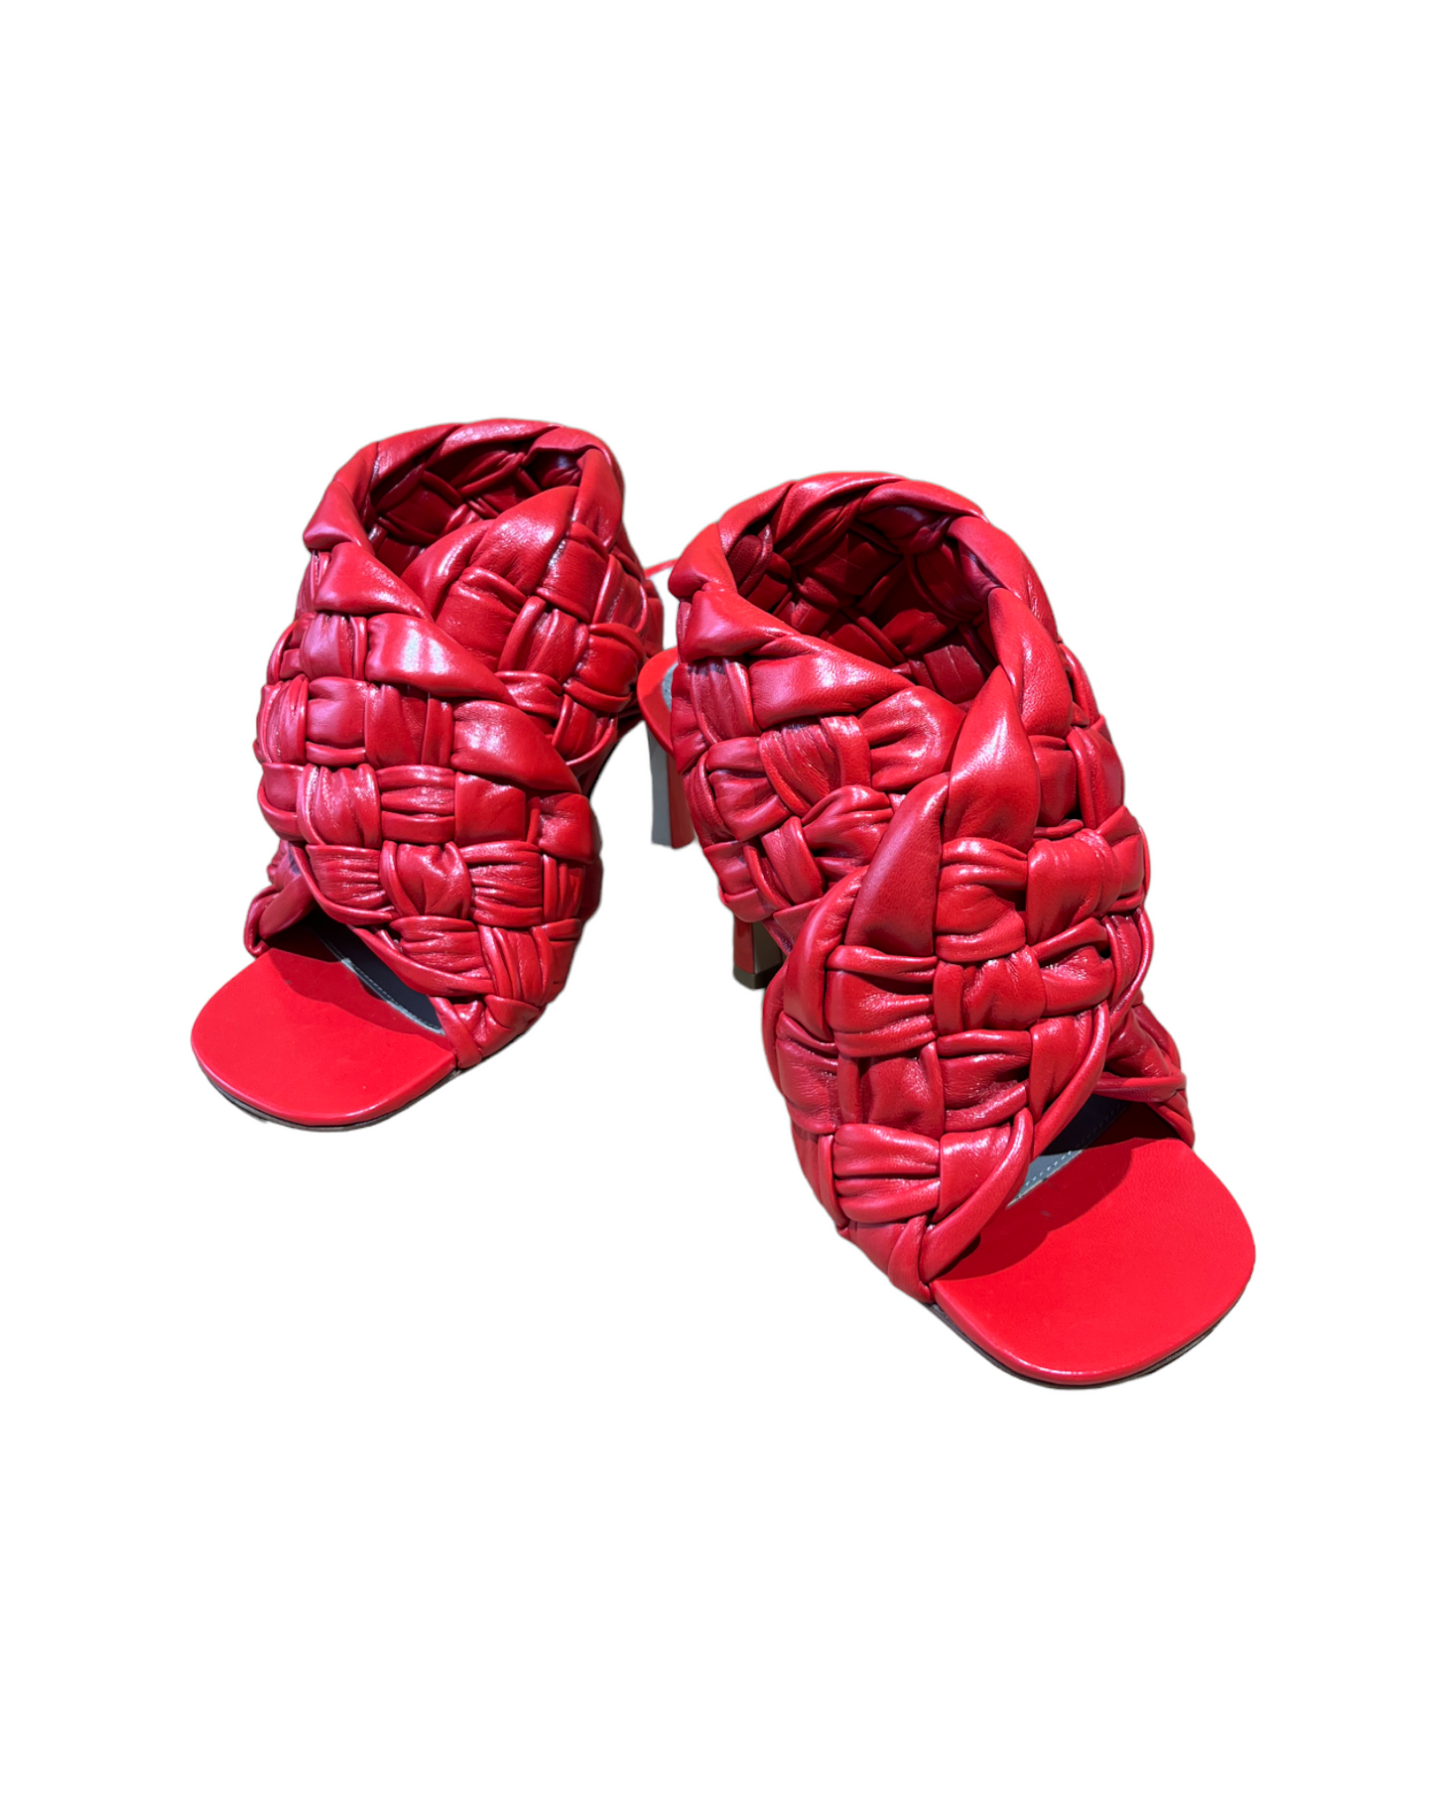 Bottega Veneta Red Board Sandals